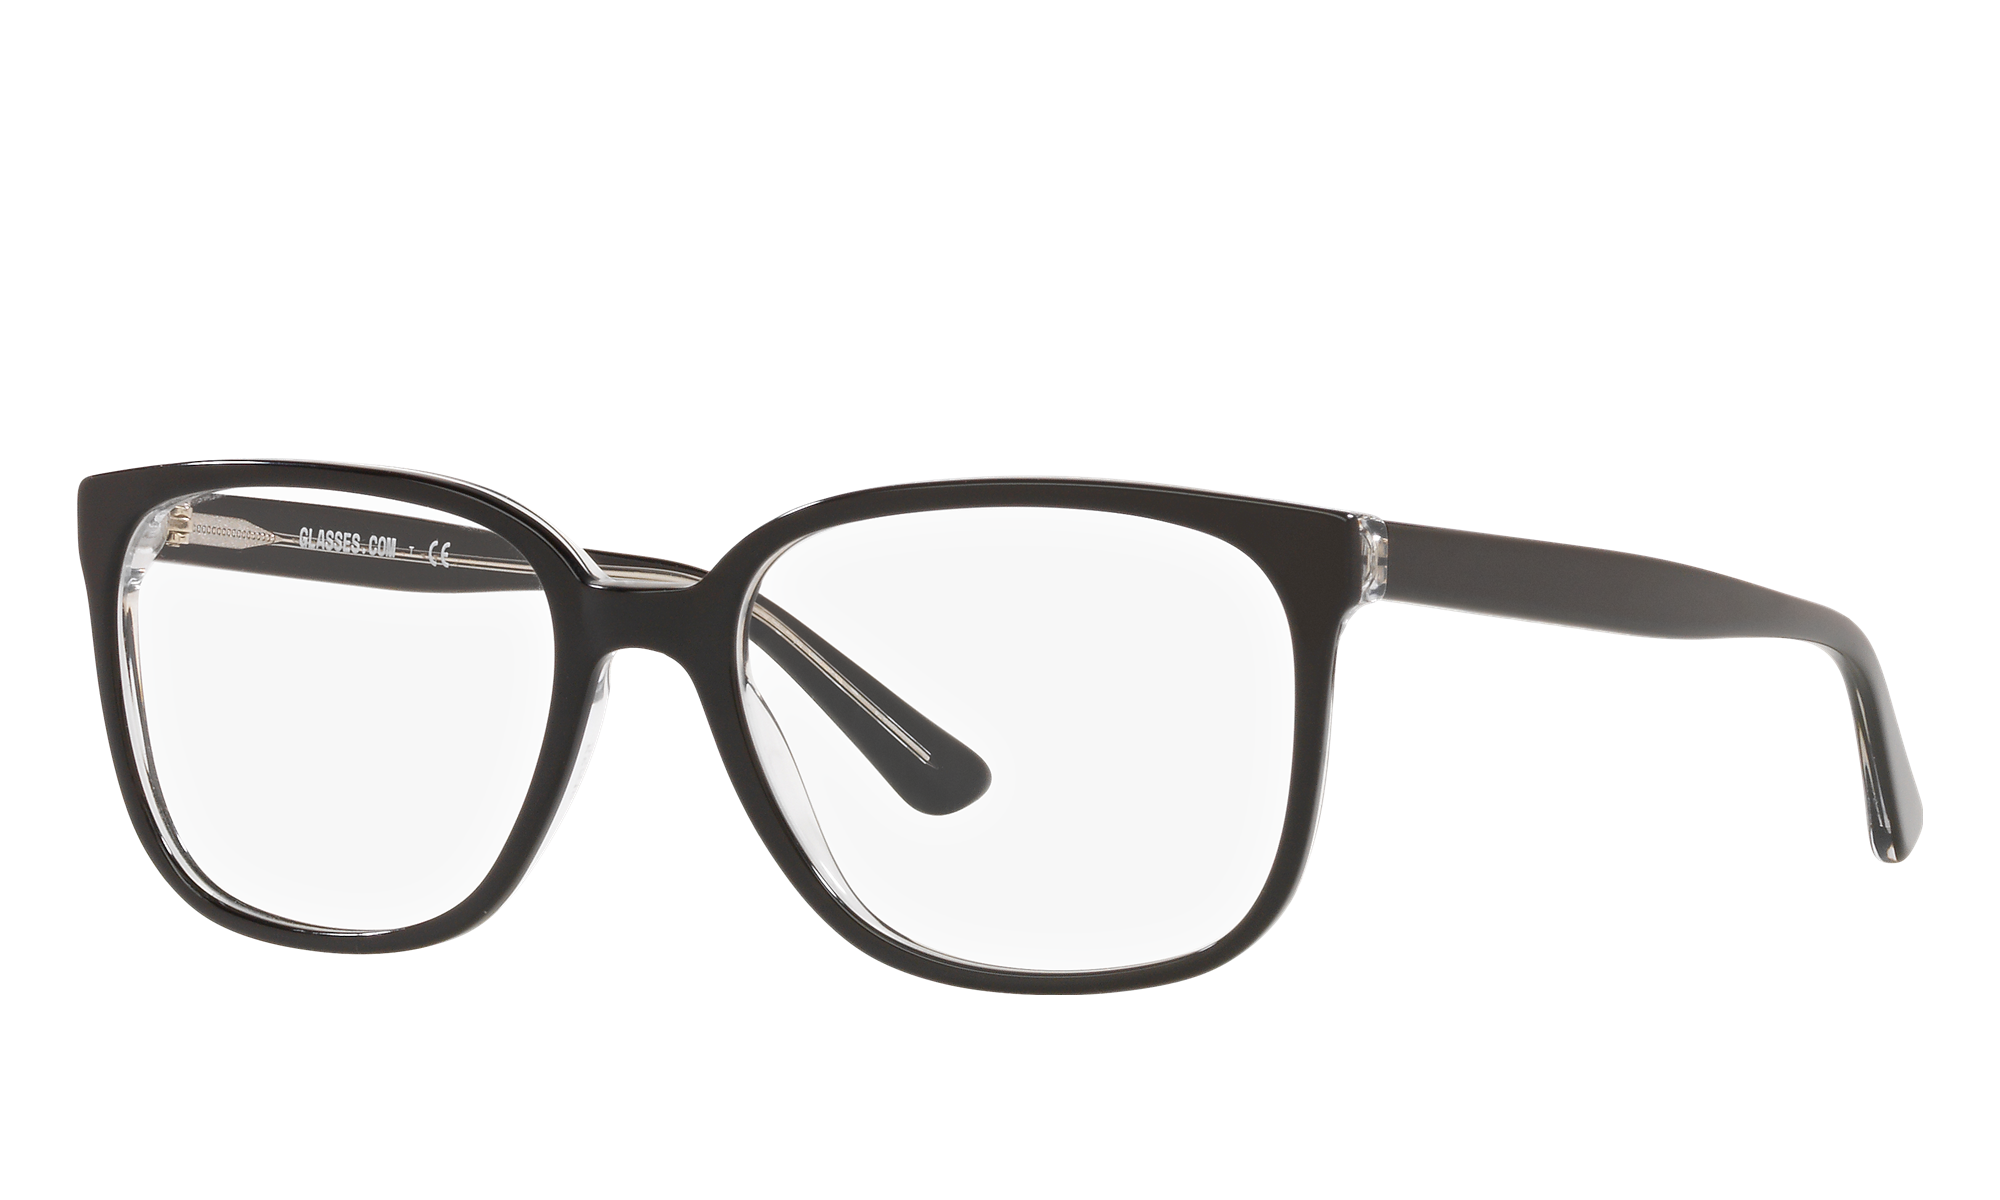 Glasses.com Unisex Gk2002 Shiny Top Black On Trasparent Size: Small